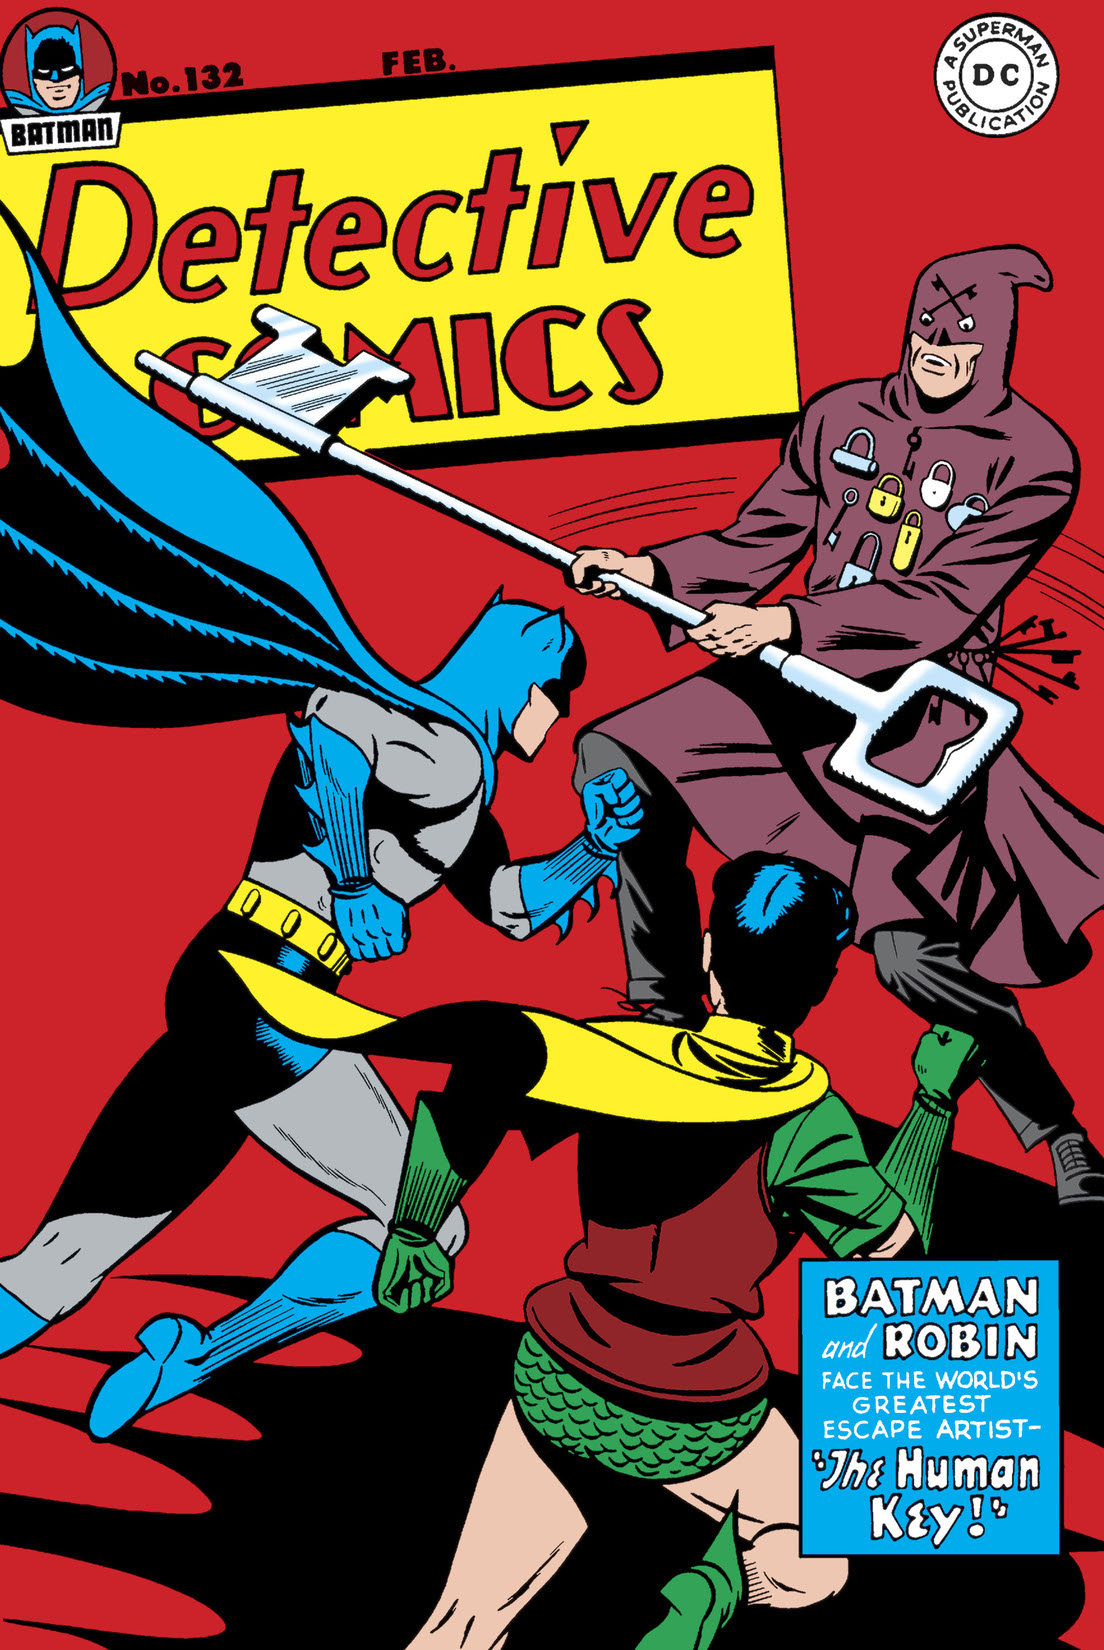 Detective Comics (1937-) #132 preview images